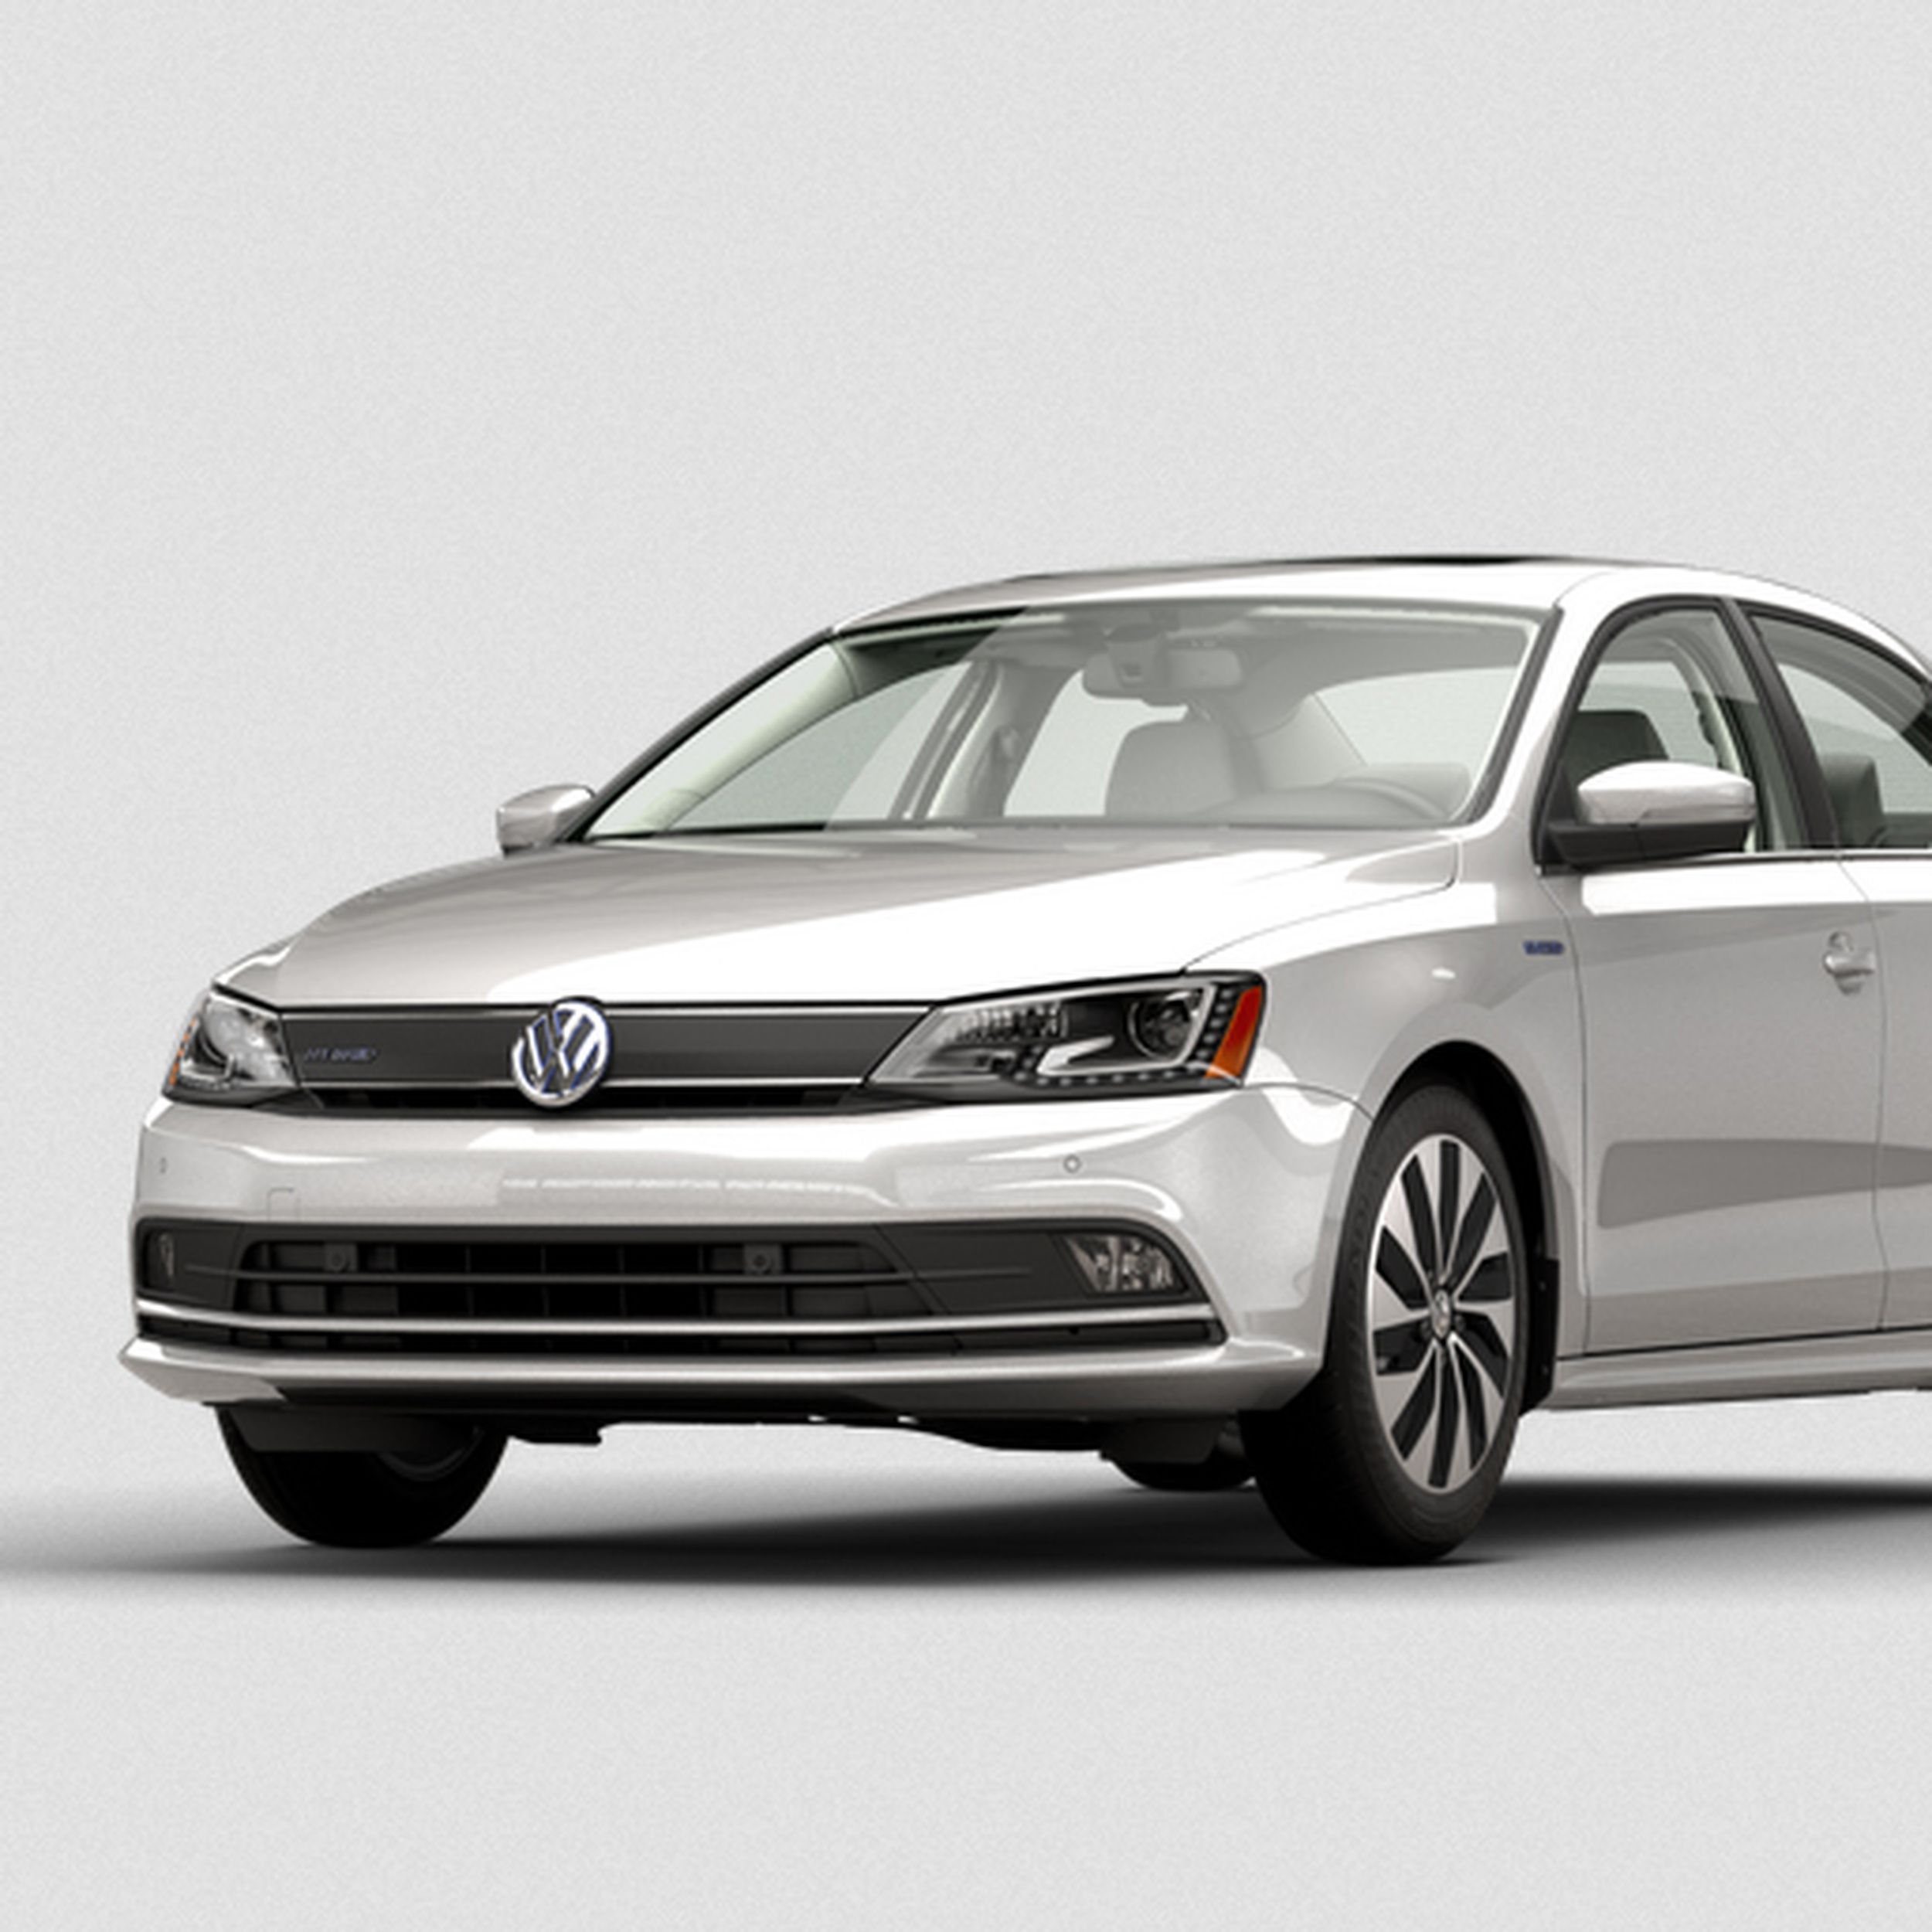 2015 Volkswagen Jetta Hybrid - April 4, 2015 | The Spokesman-Review